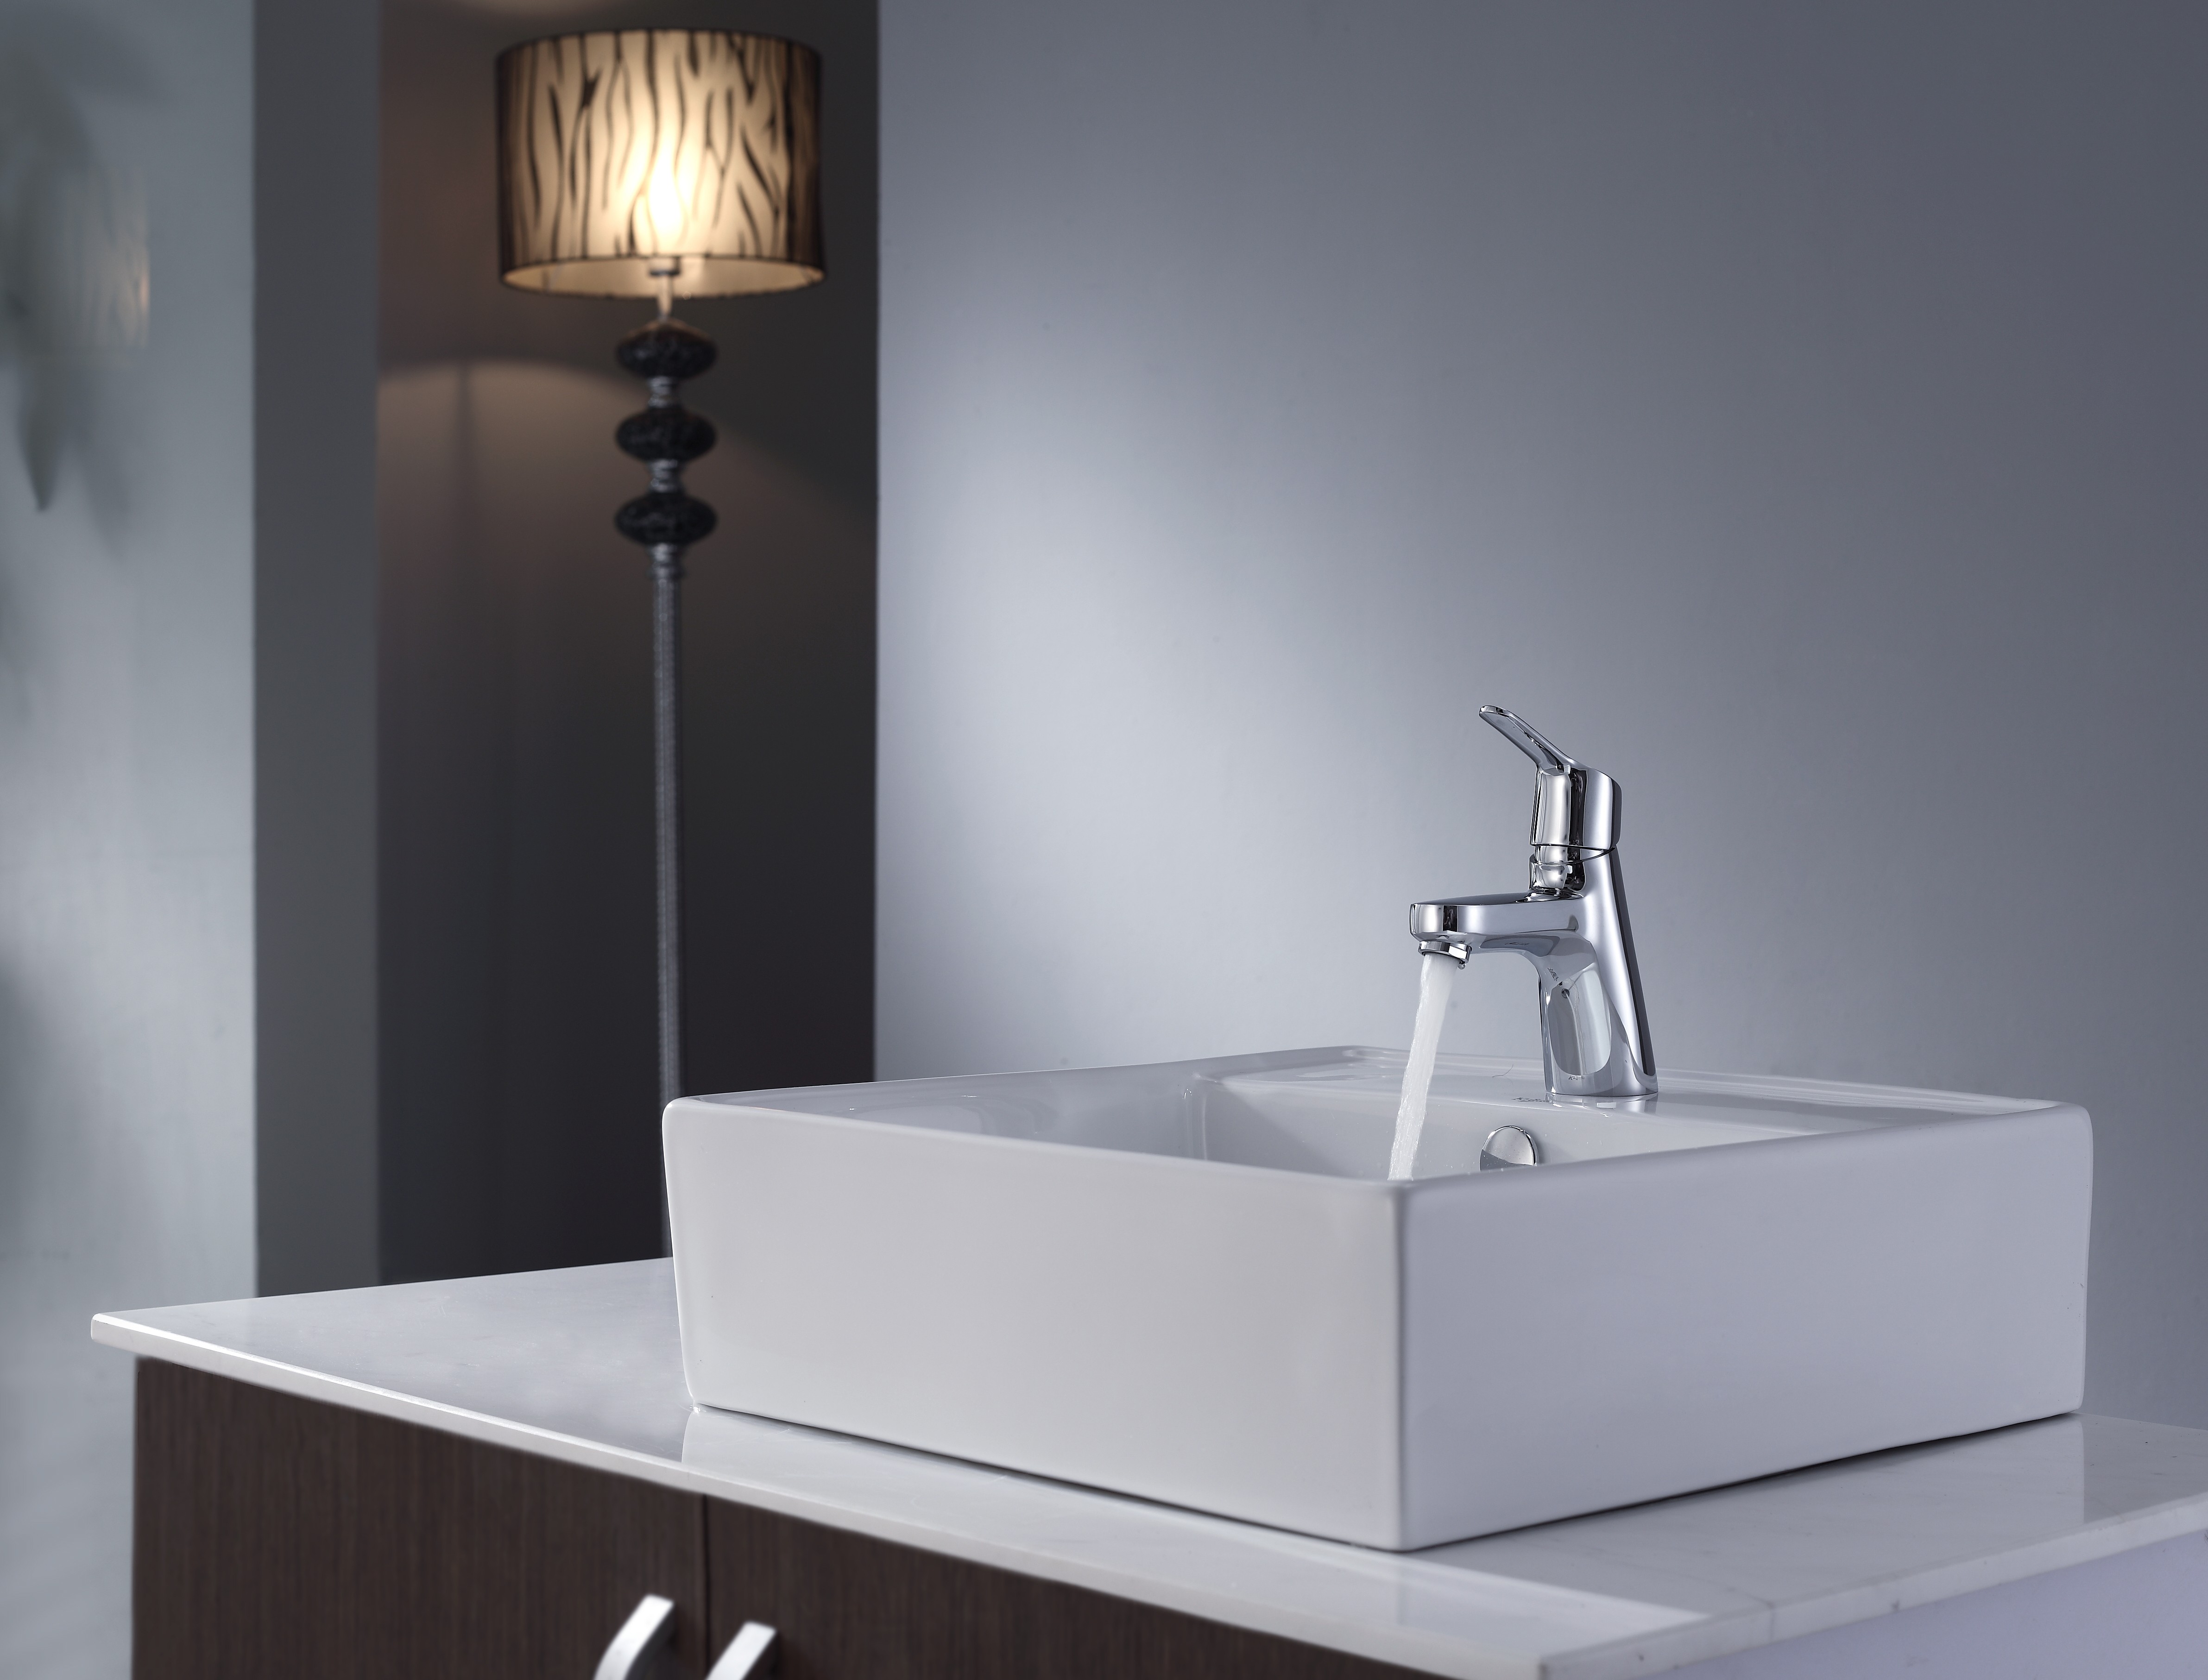 21 Ceramic Sink Design Ideas For Kitchen and Bathroom ...